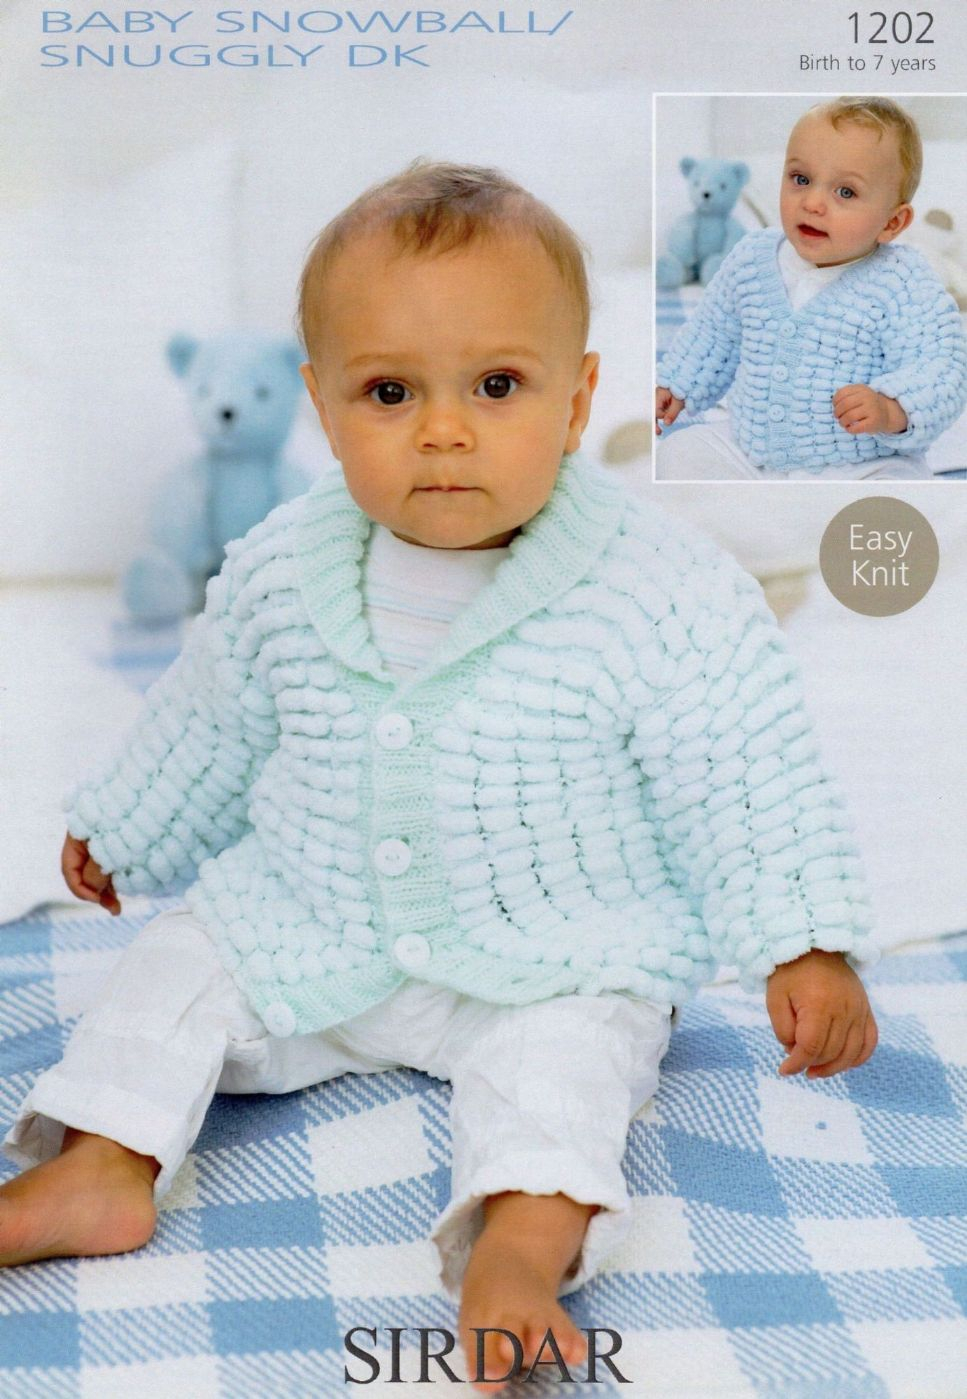 Sirdar Baby Knitting Patterns 1202 Sirdar Ba Snowball Snuggly Dk Cardigan Knitting Pattern To Fit 0 To 7 Yrs